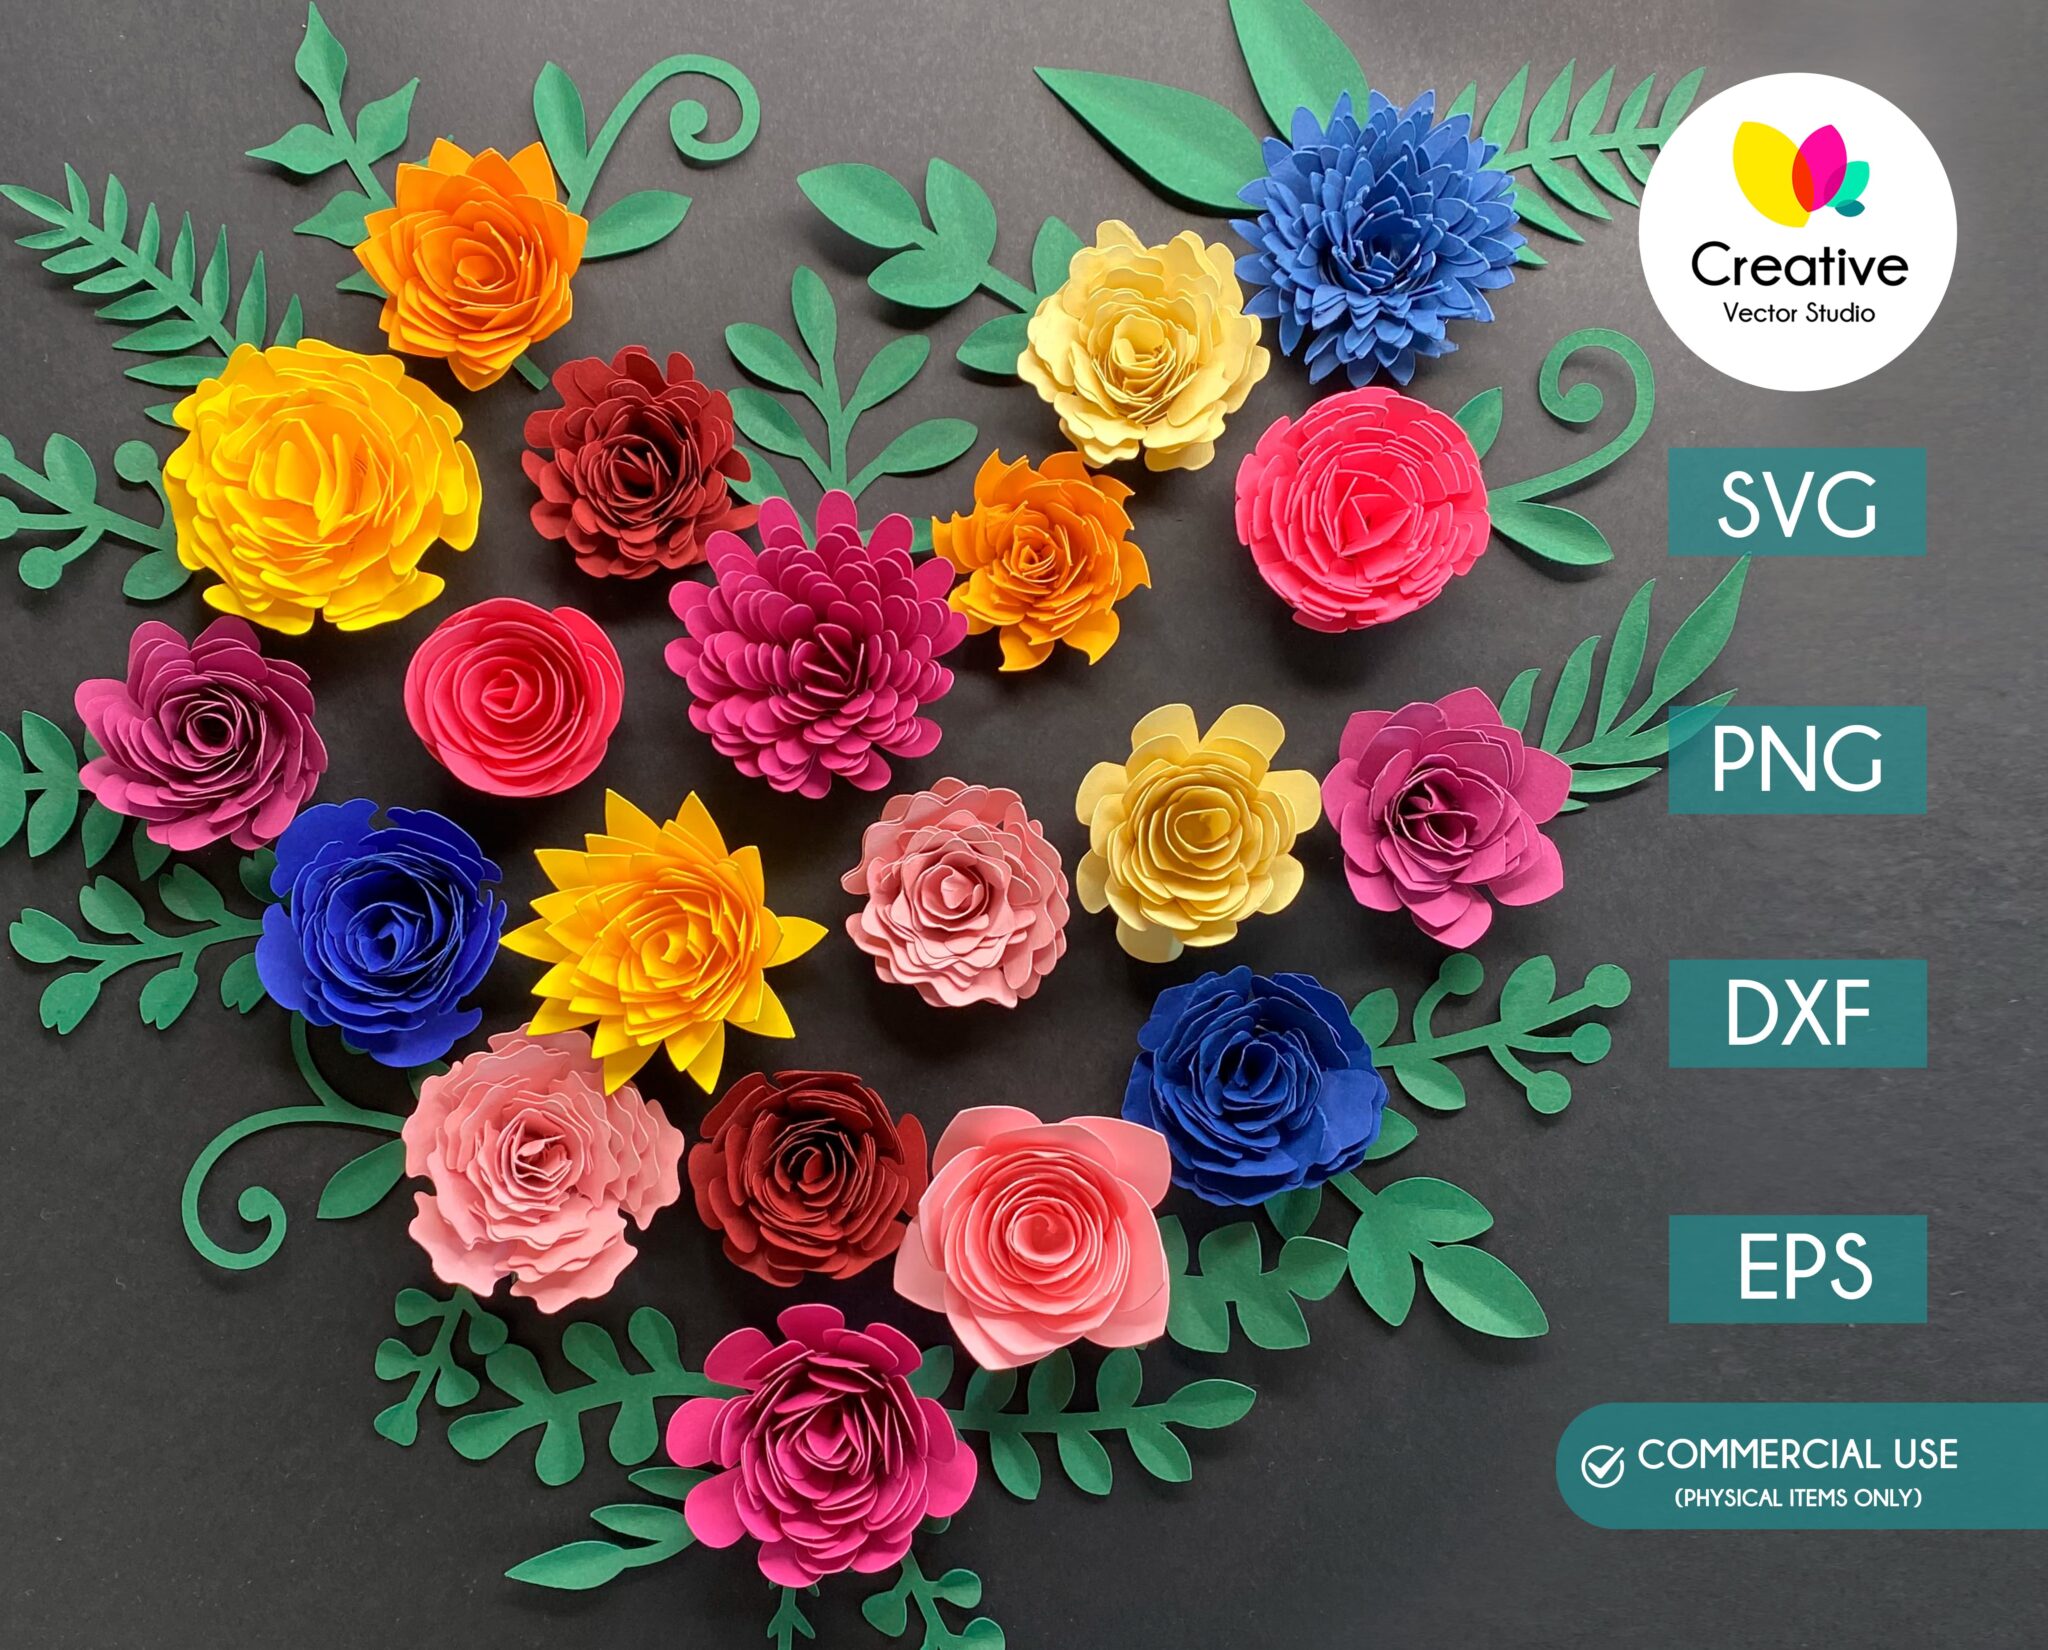 Rolled Flower and Leaves SVG Bundle - Creative Vector Studio